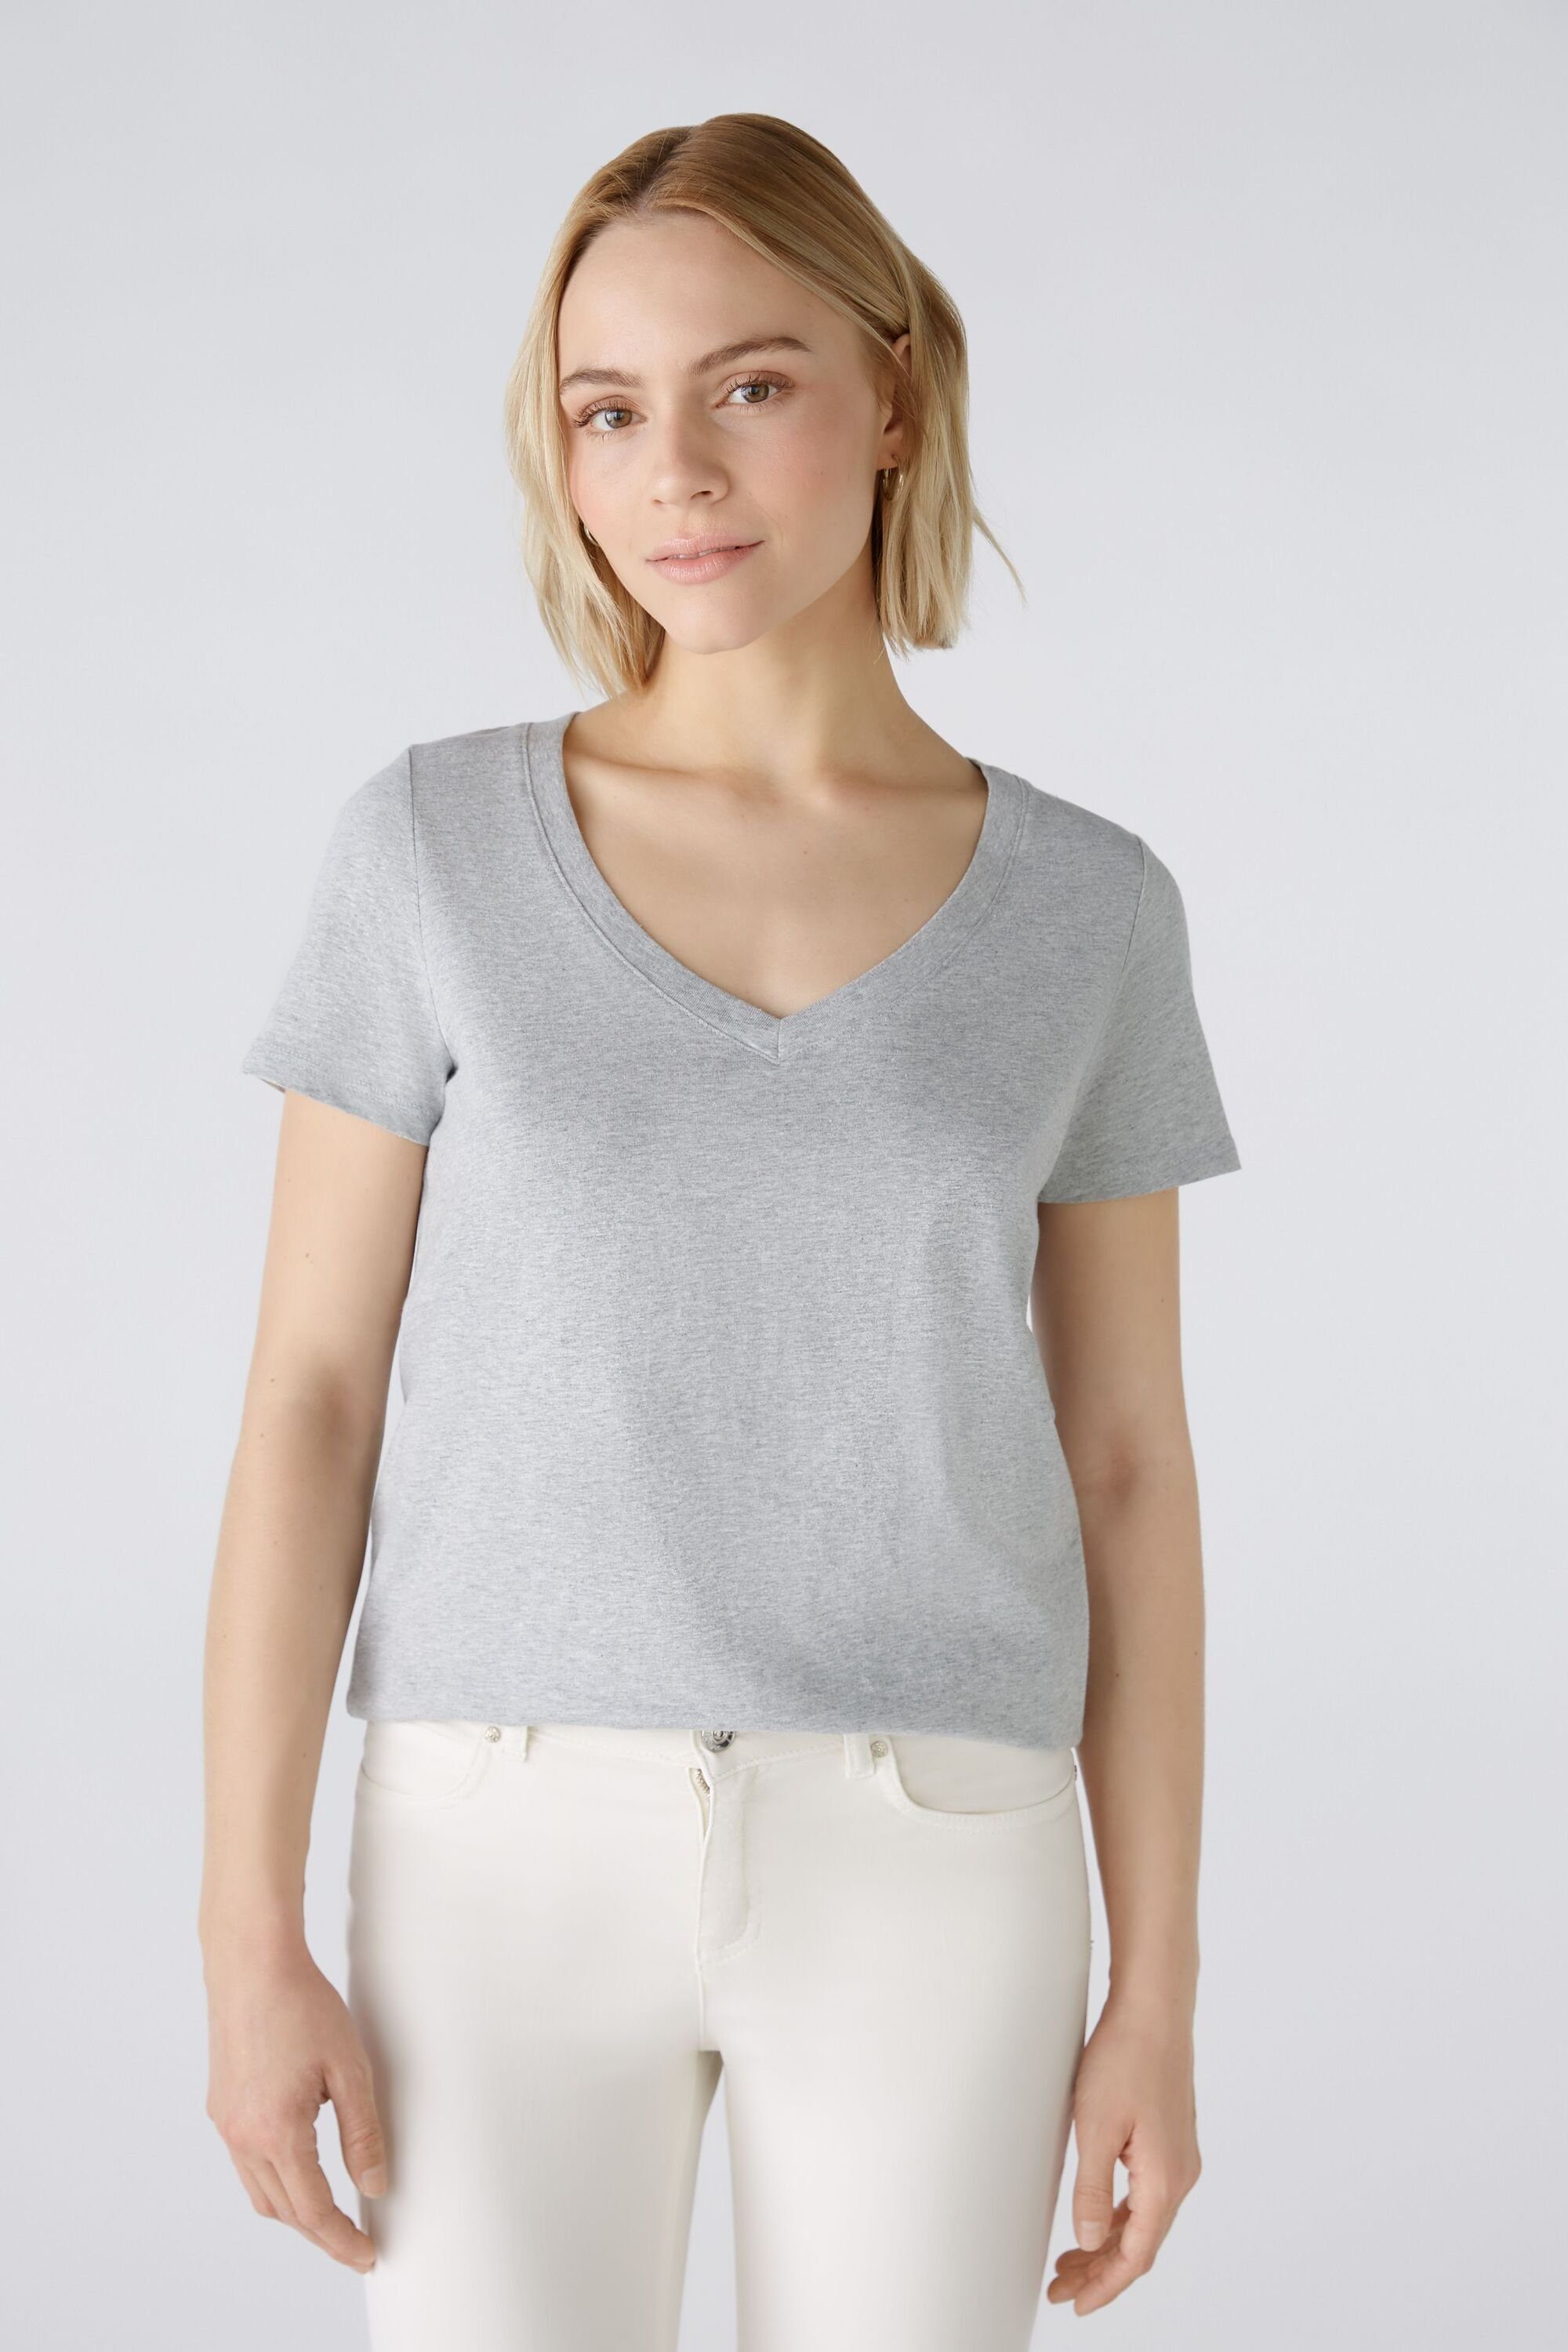 T-Shirt Bio-Baumwolle light Oui CARLI T-Shirt grey 100%